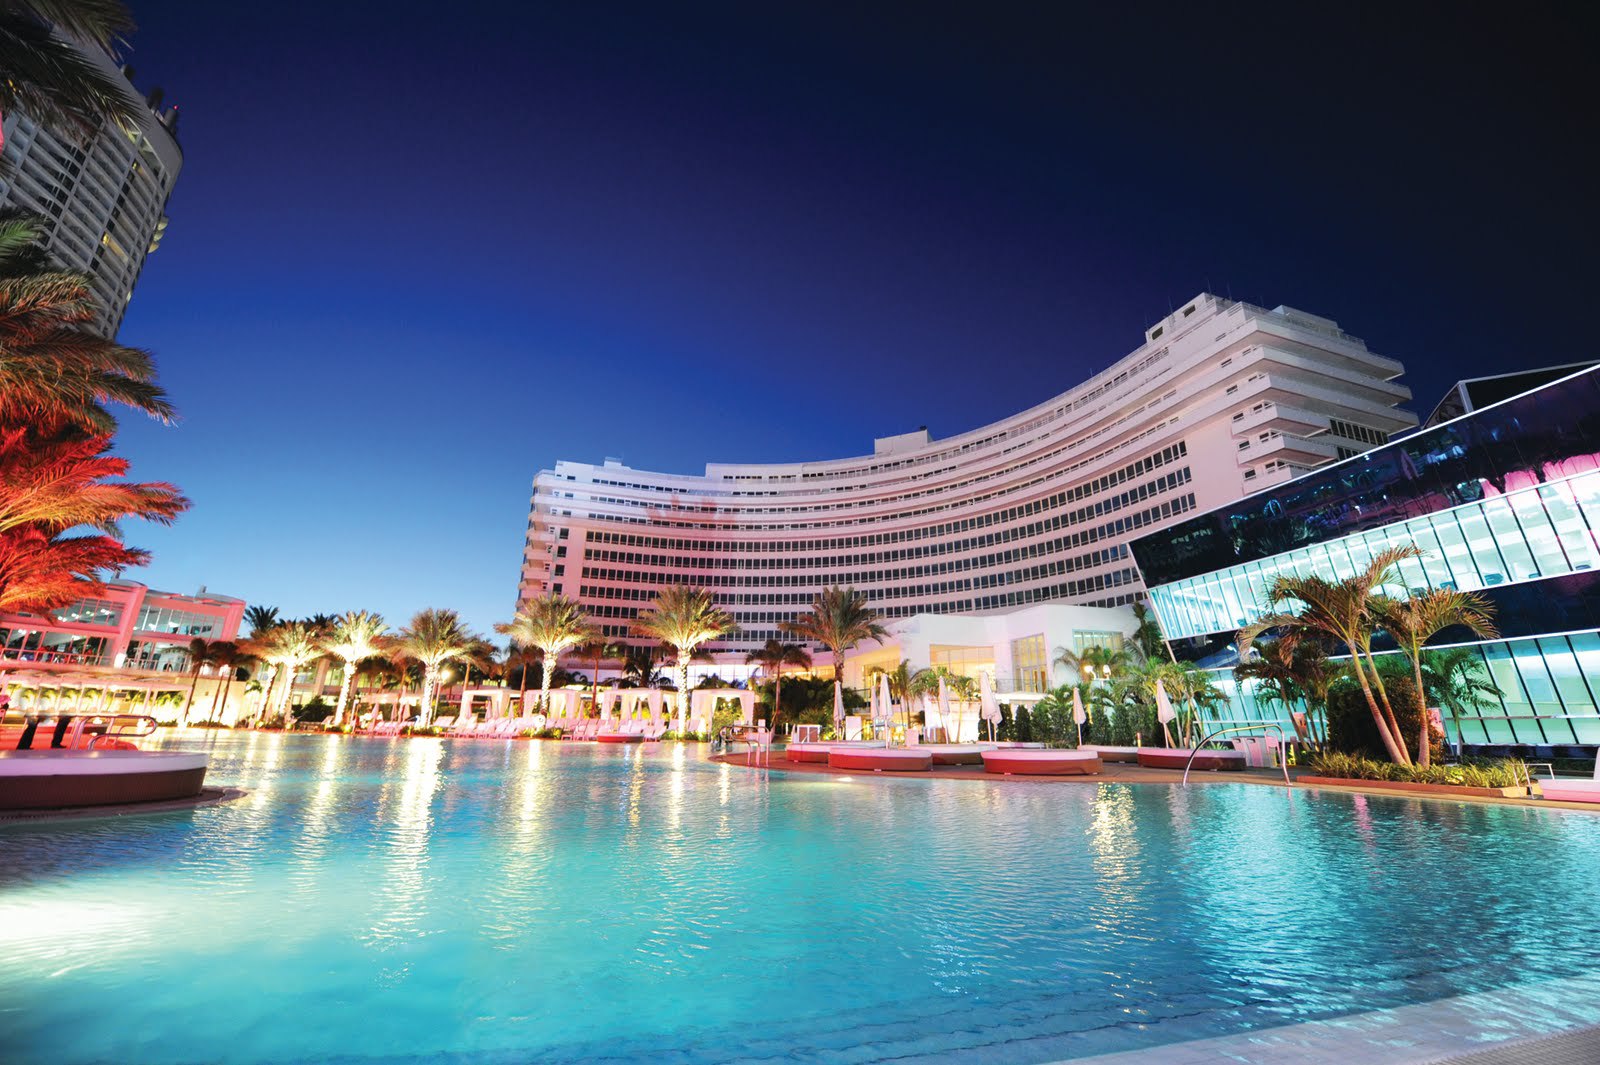 Hotel Miami Beach HD Widescreen Wallpaper Source